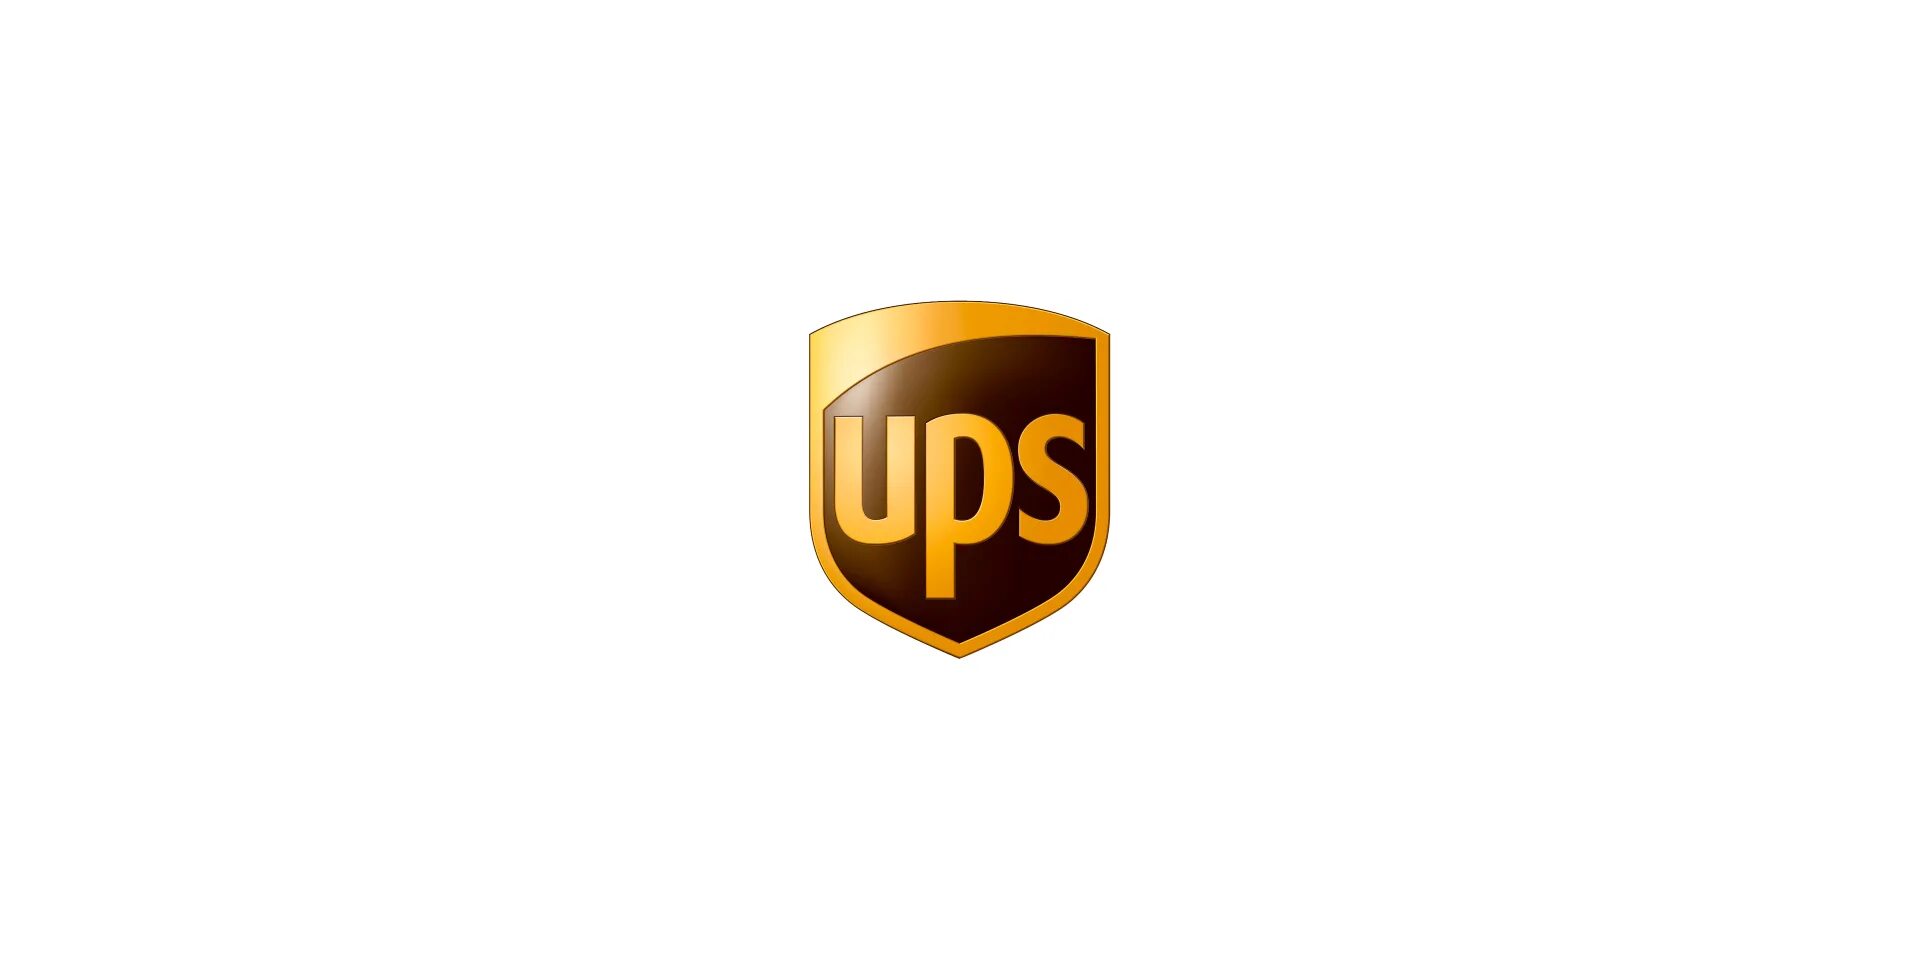 Ups logo. Ups logo PNG. Ups фирменный знак. United parcel service логотип. T me bank open ups